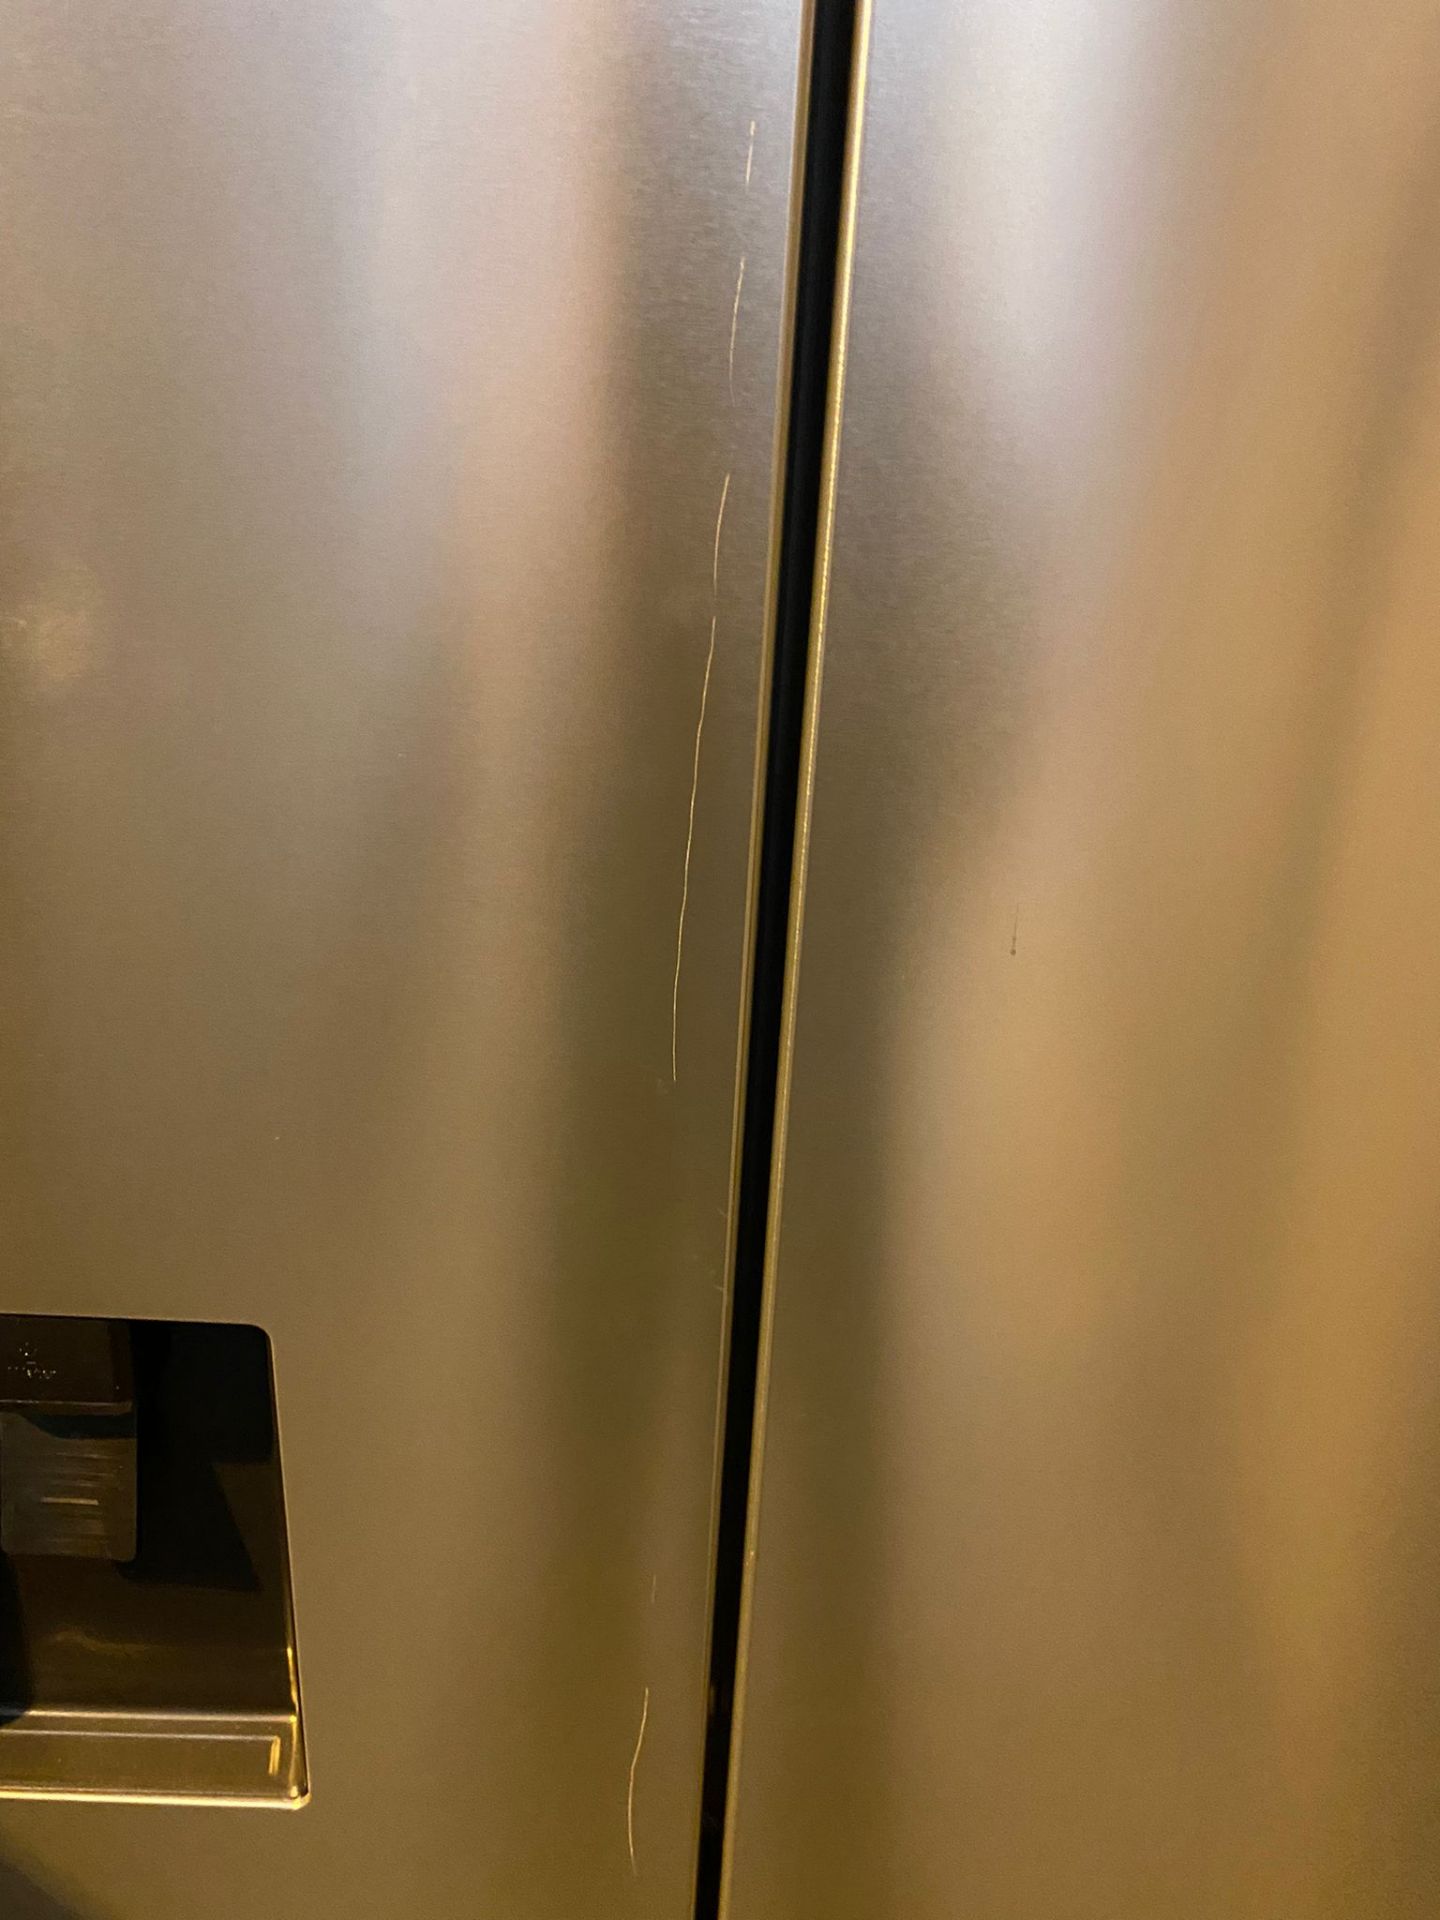 1 x HiSense RQ758N4SWI1 Stainless Steel American Style Fridge Freezer - Unused With Warranty - Image 4 of 7